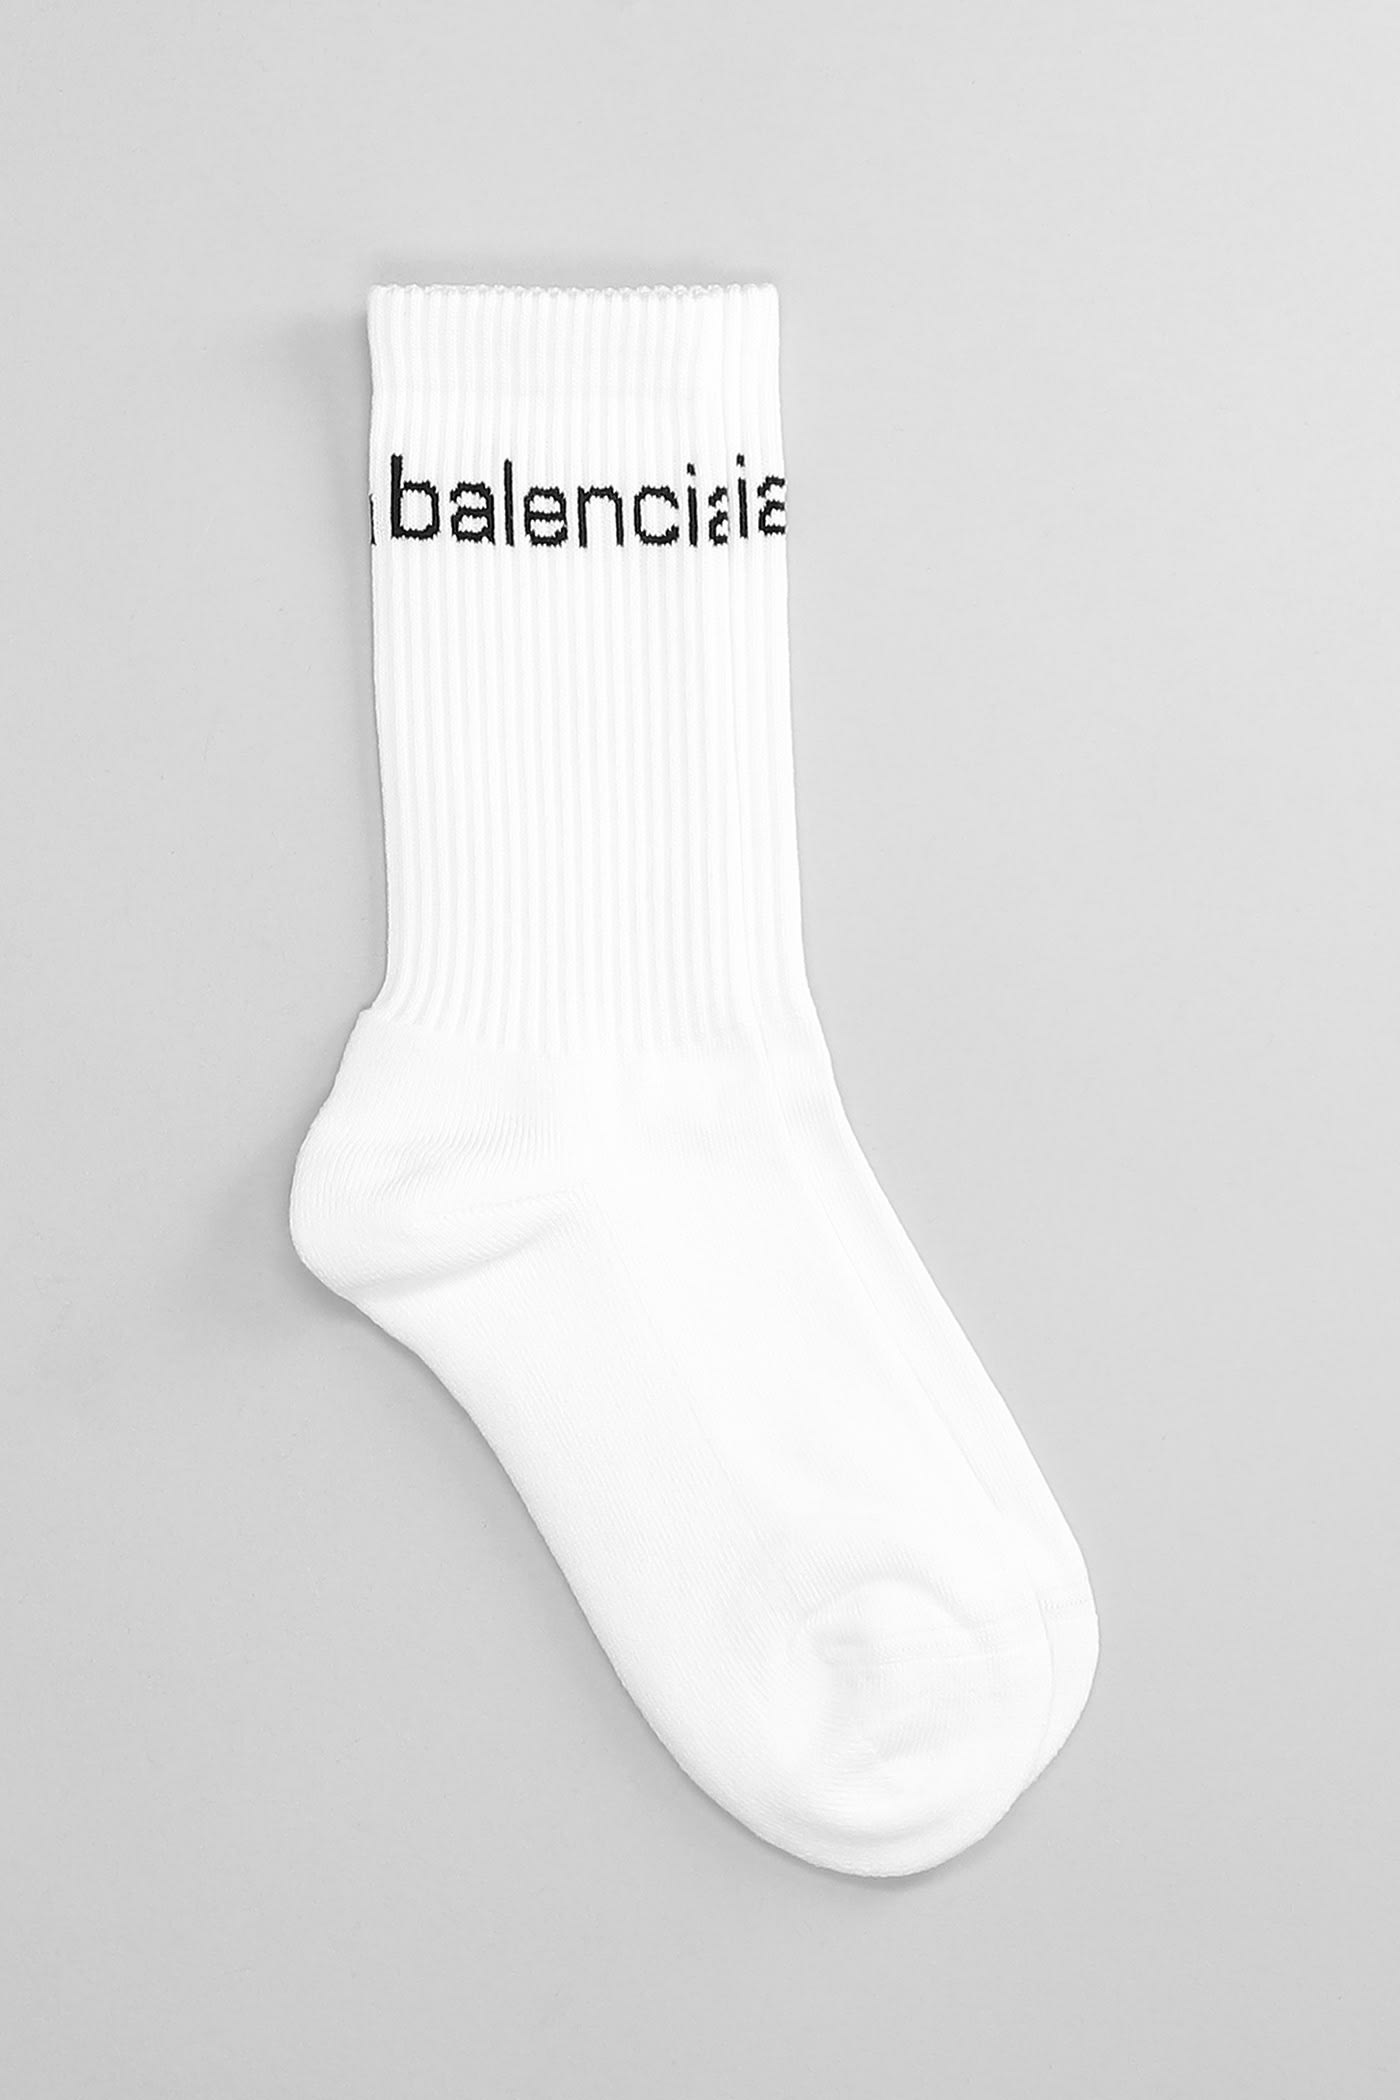 BALENCIAGA SOCKS IN WHITE COTTON